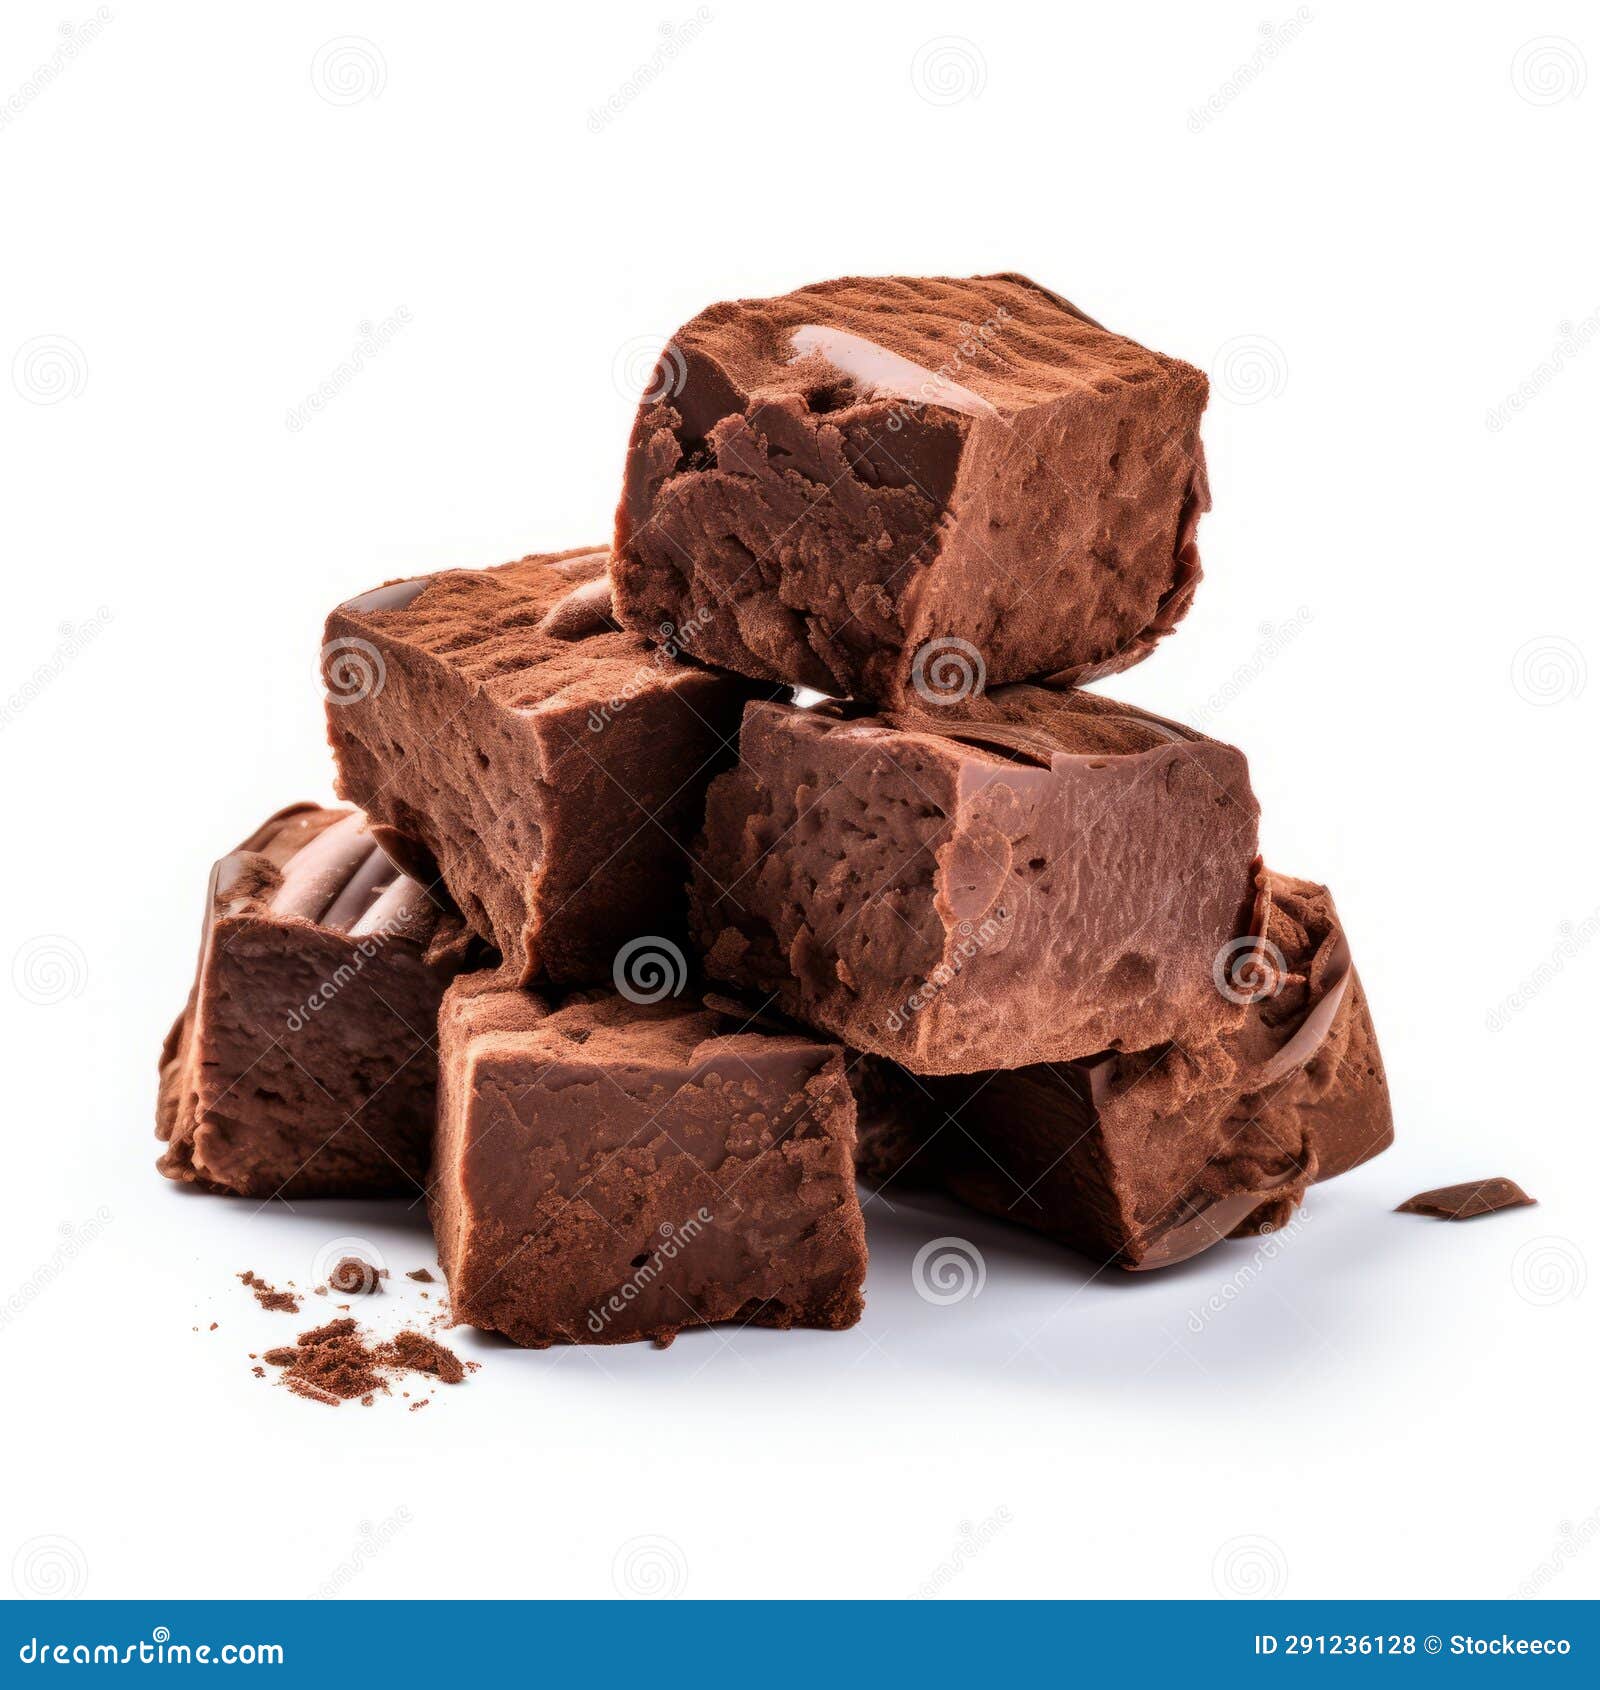 delicious chocolate fudge slices - cubo-futurism style